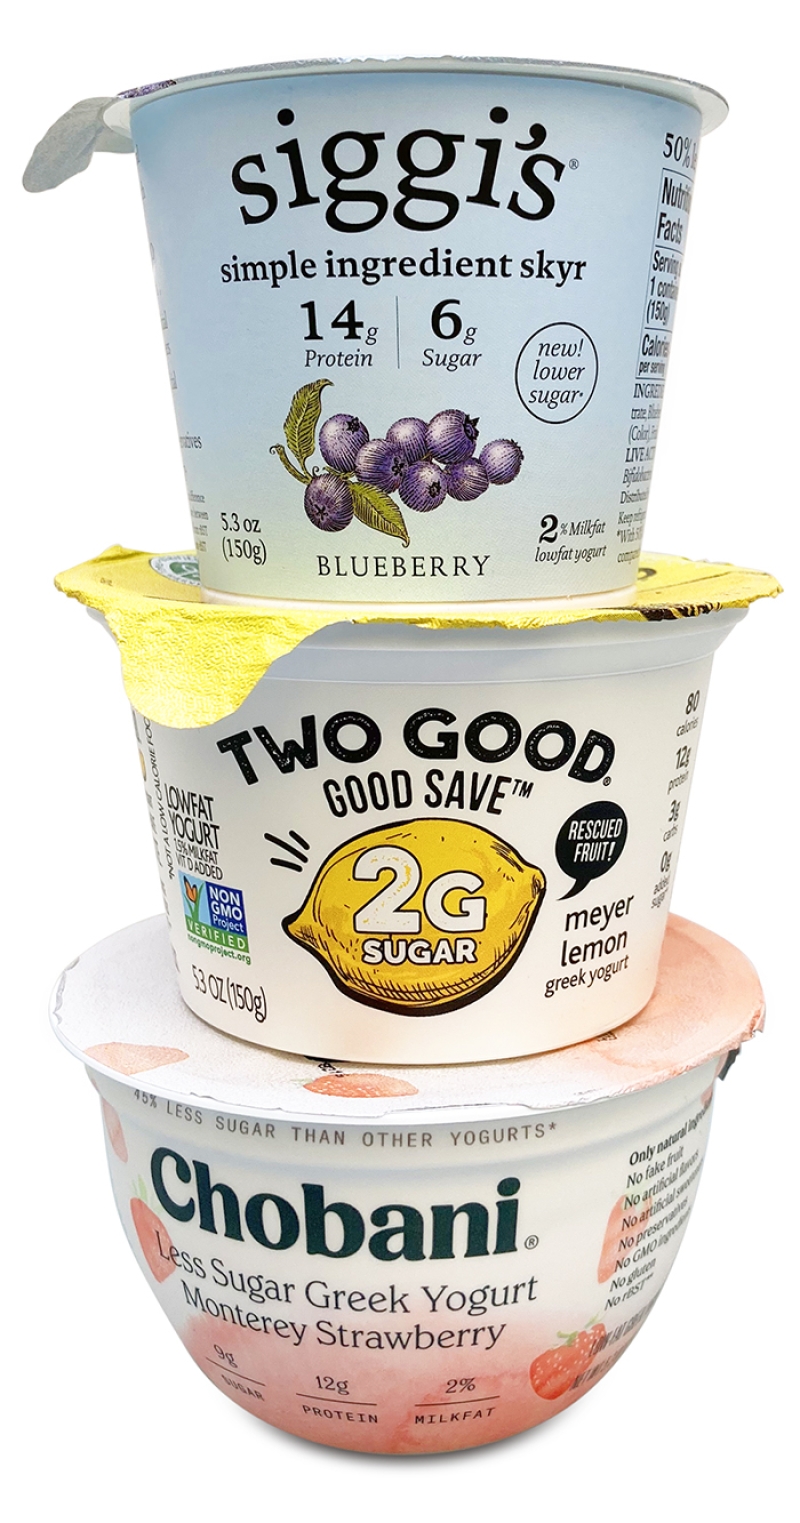 Siggi's, two good, and Chobani yogurts in a stack